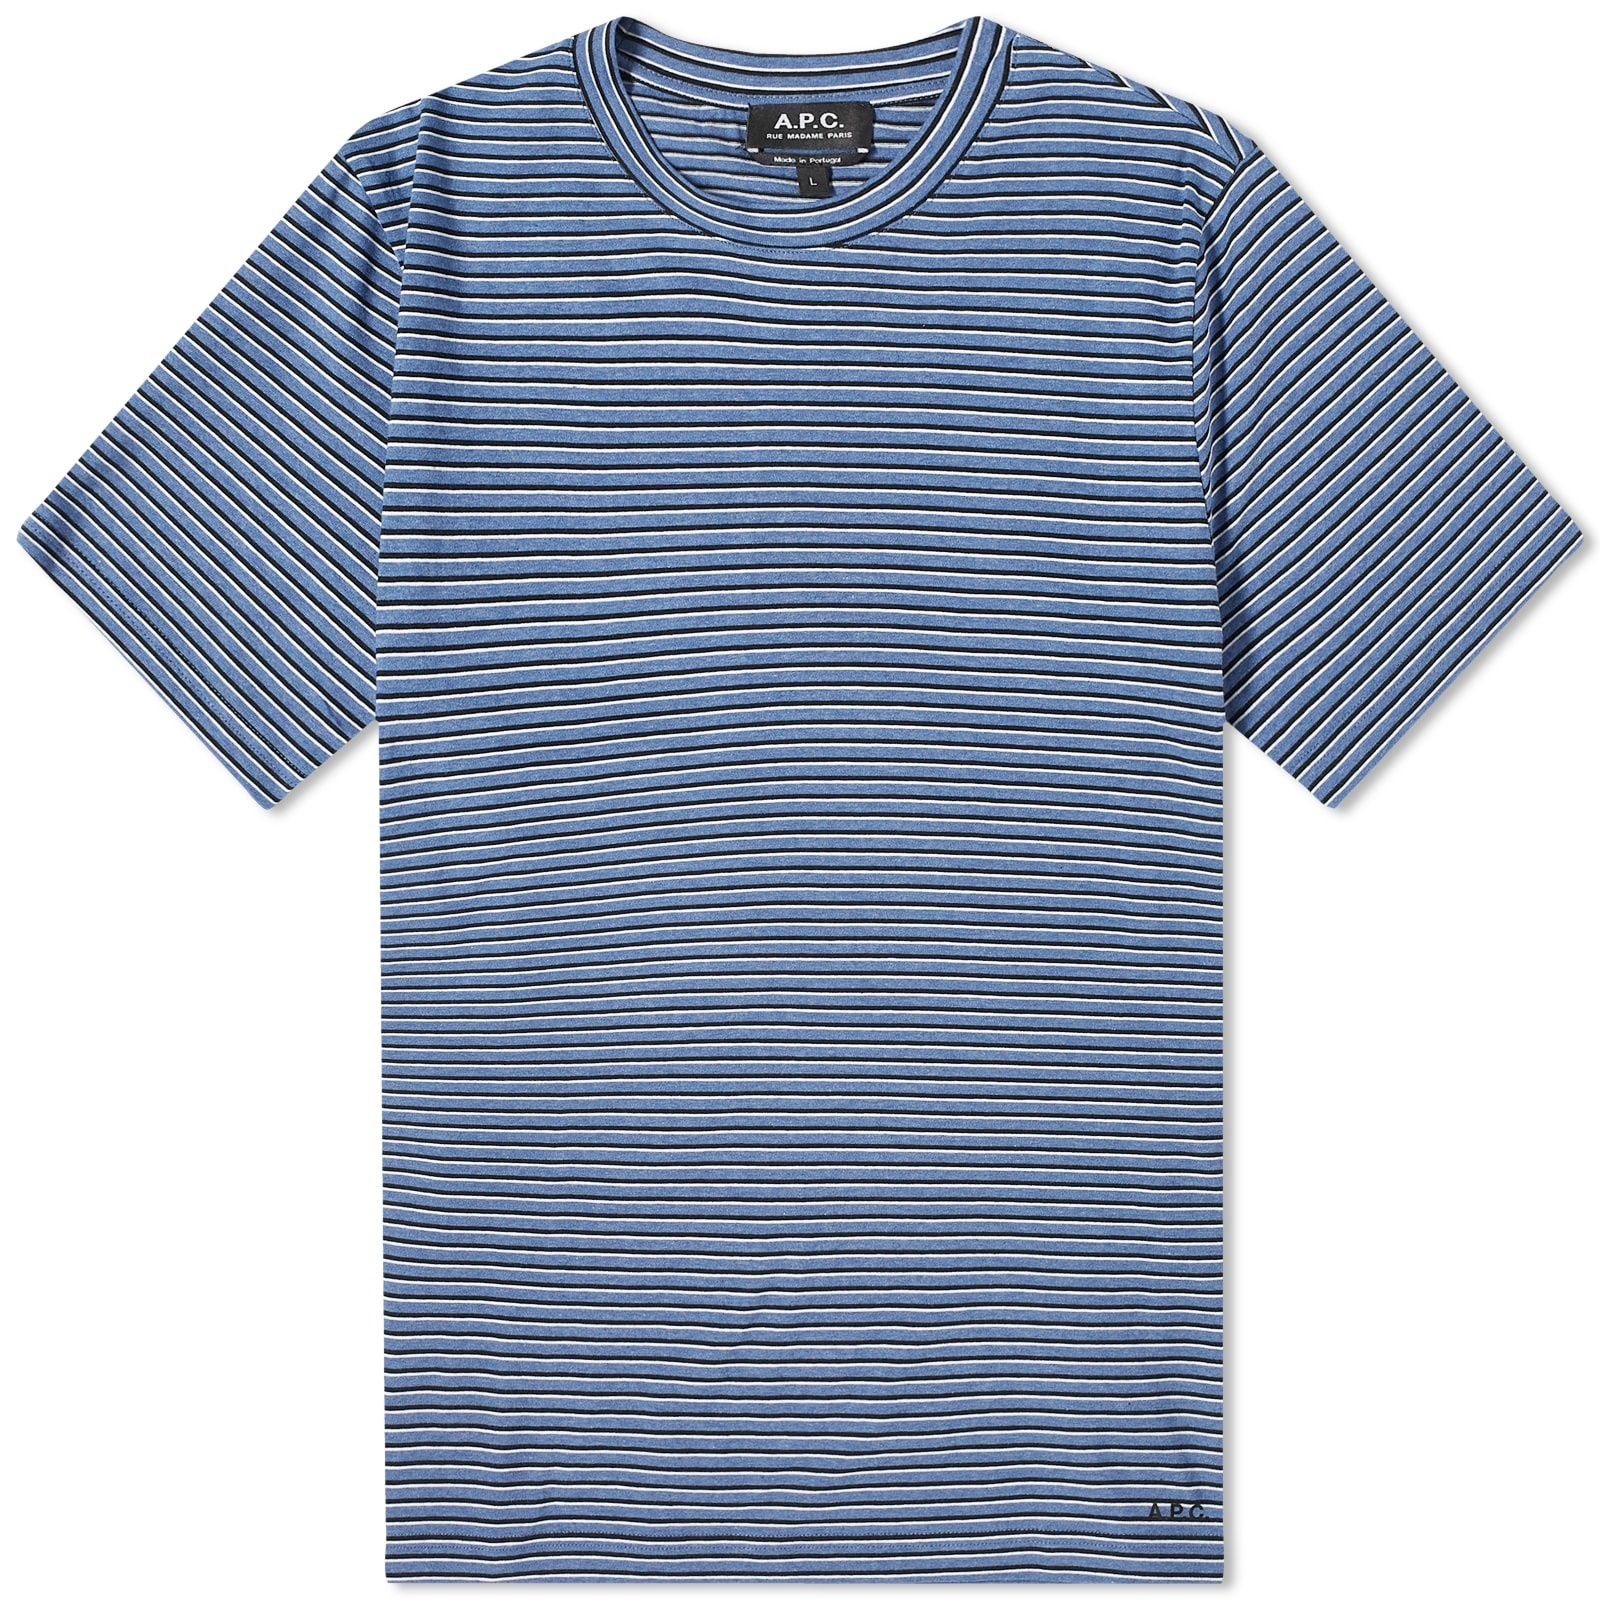 A.P.C. Aymeric Stripe T-Shirt - 1